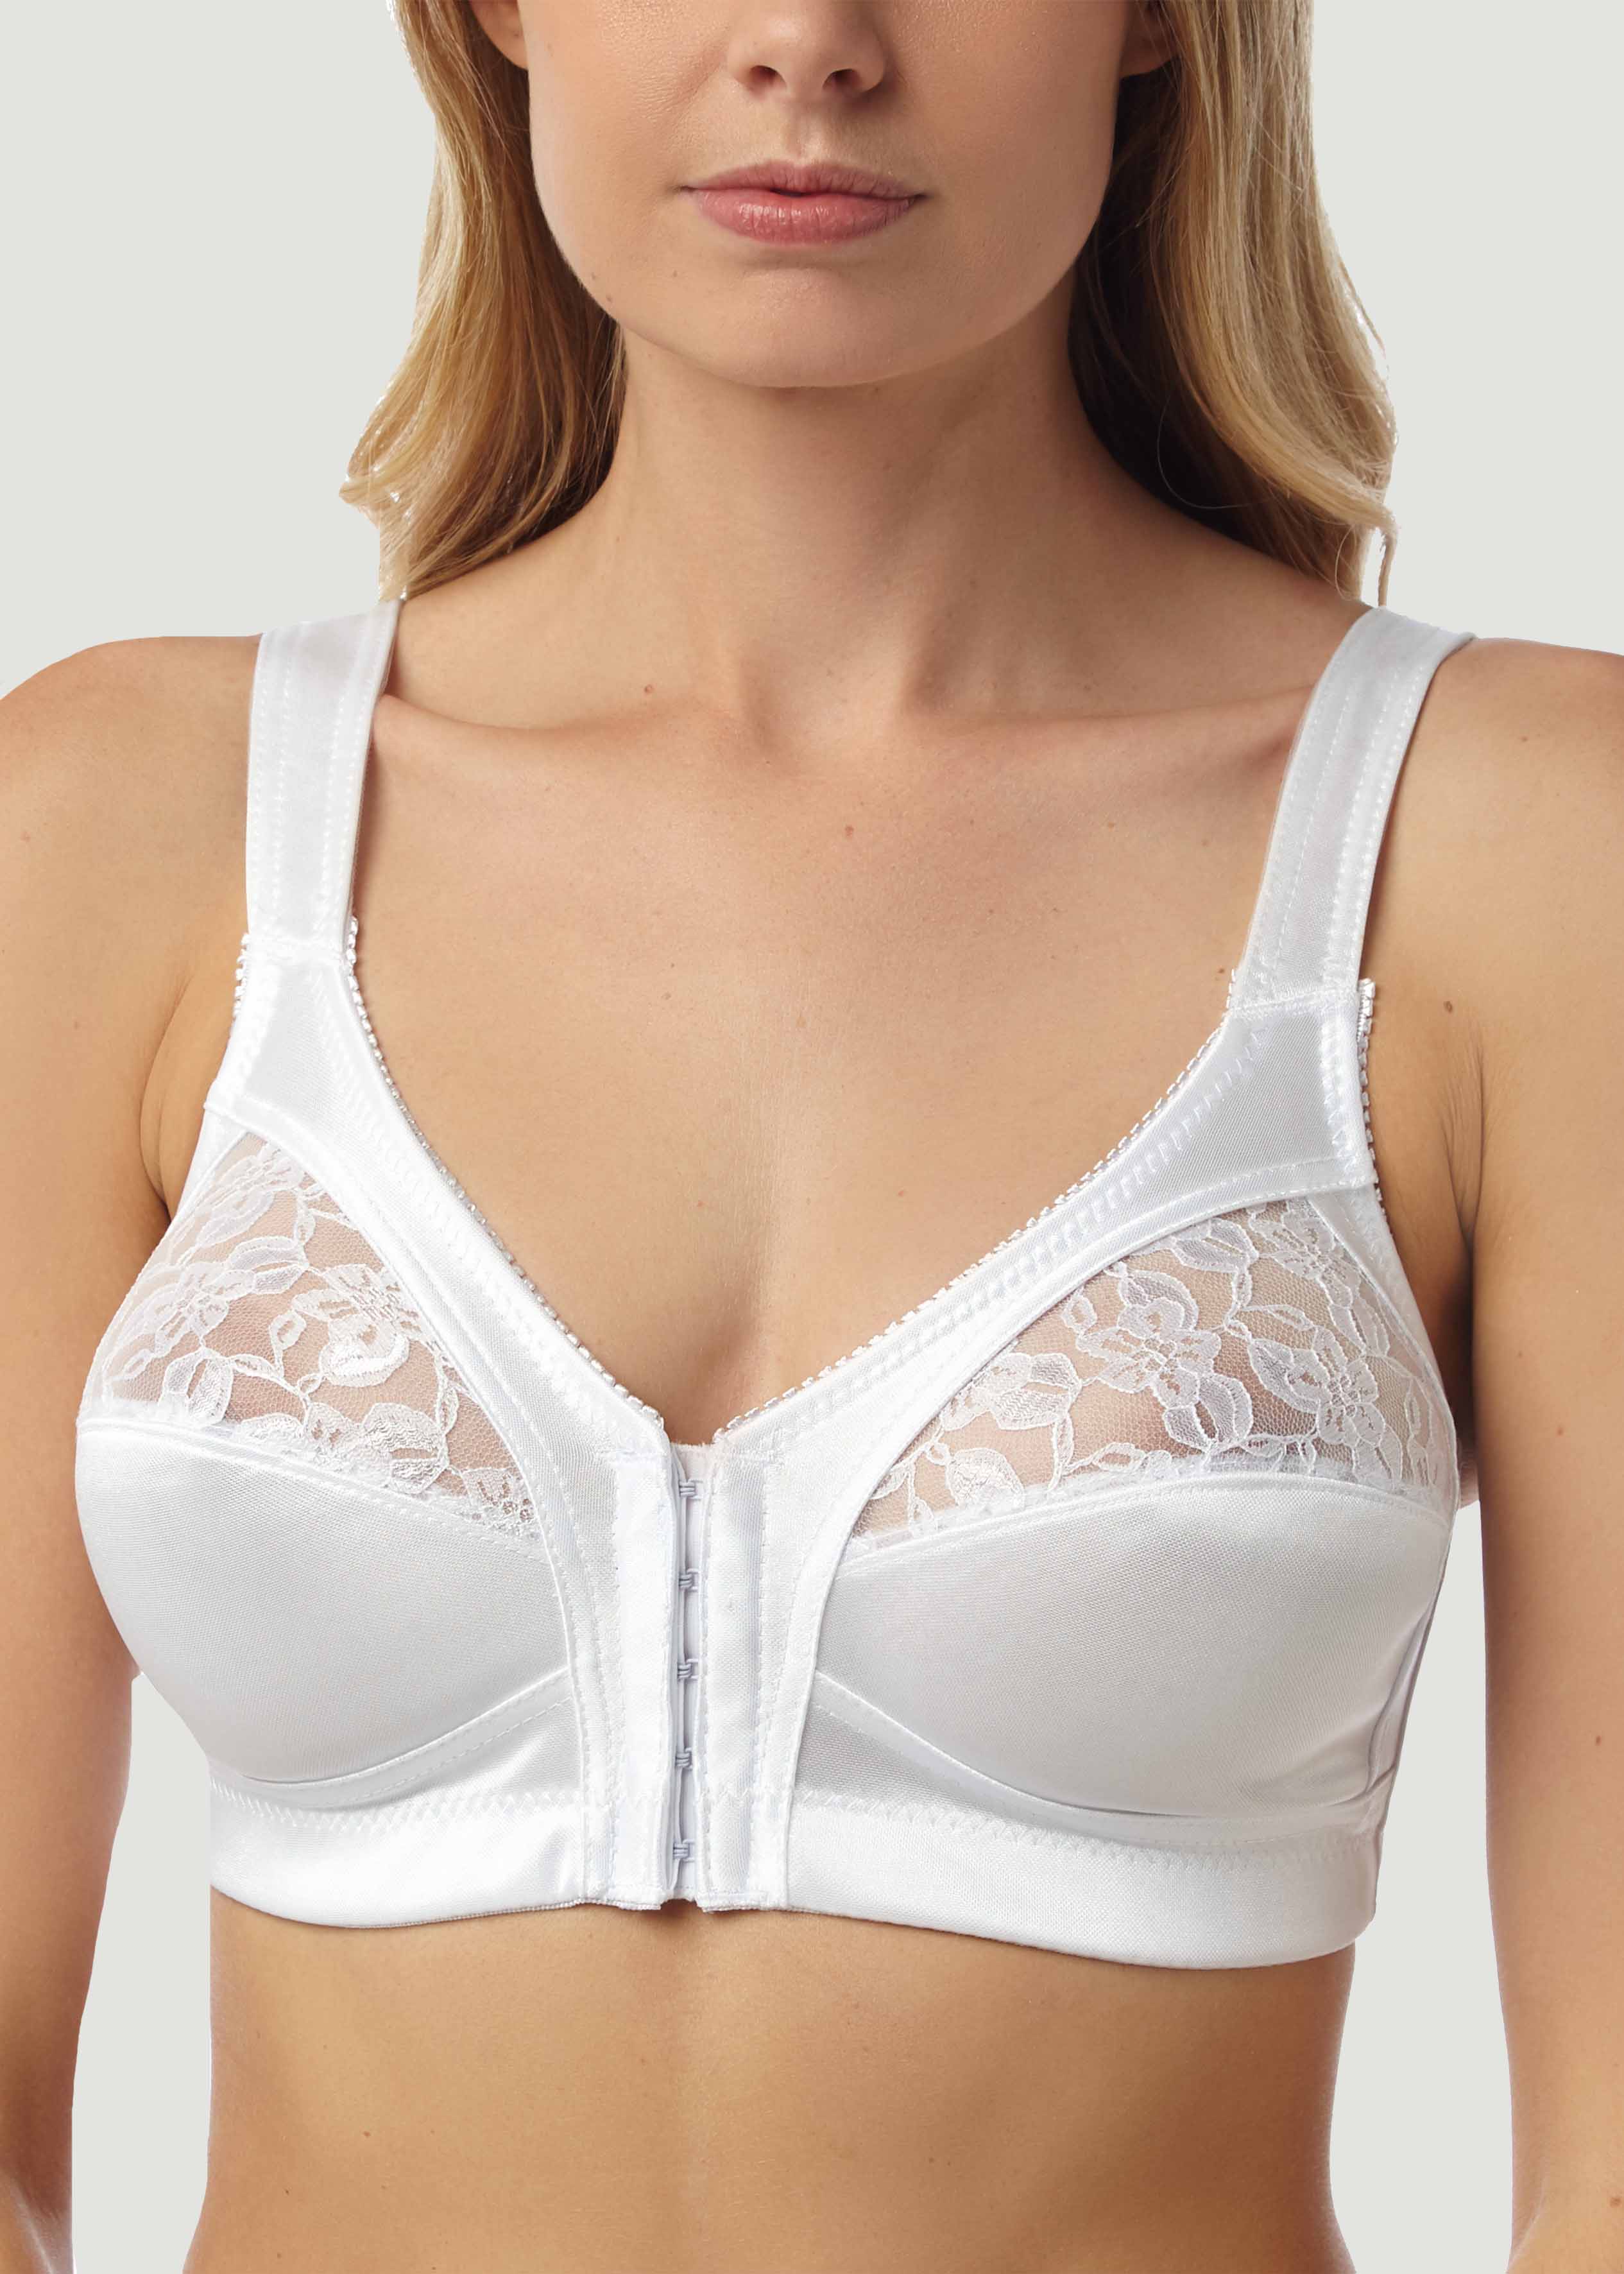 Wholesale cotton 34 bra size boobs For Supportive Underwear